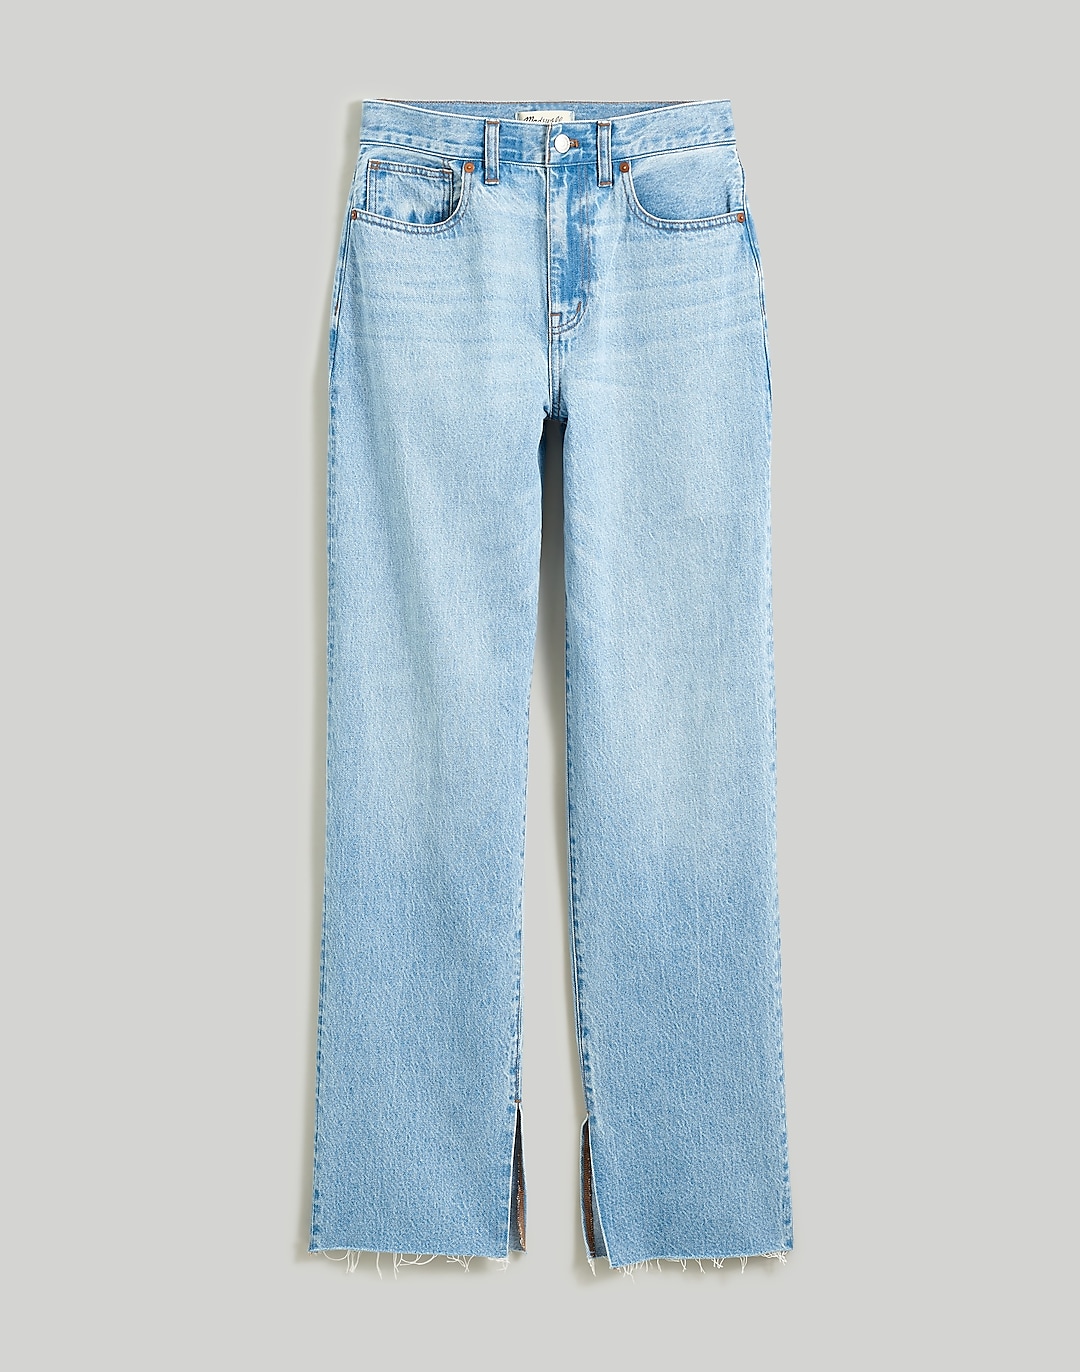 Baggy Straight Jeans in Seebald Wash: Raw-Hem Edition | Madewell